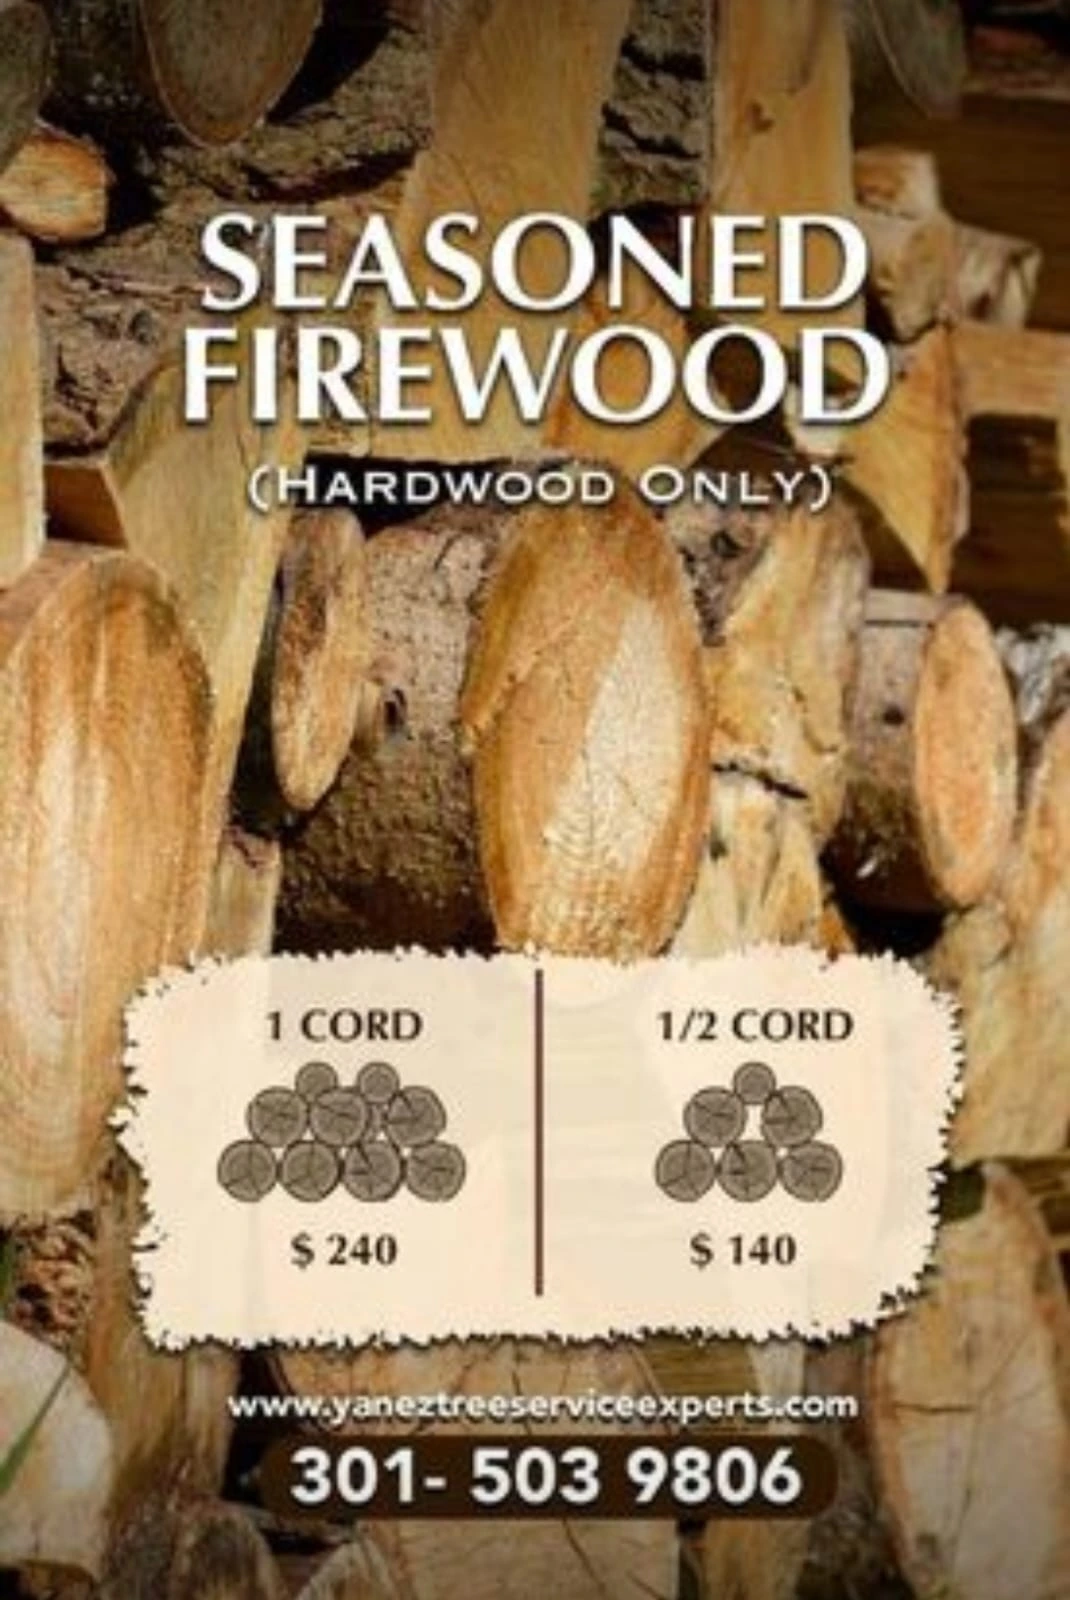 season firewood